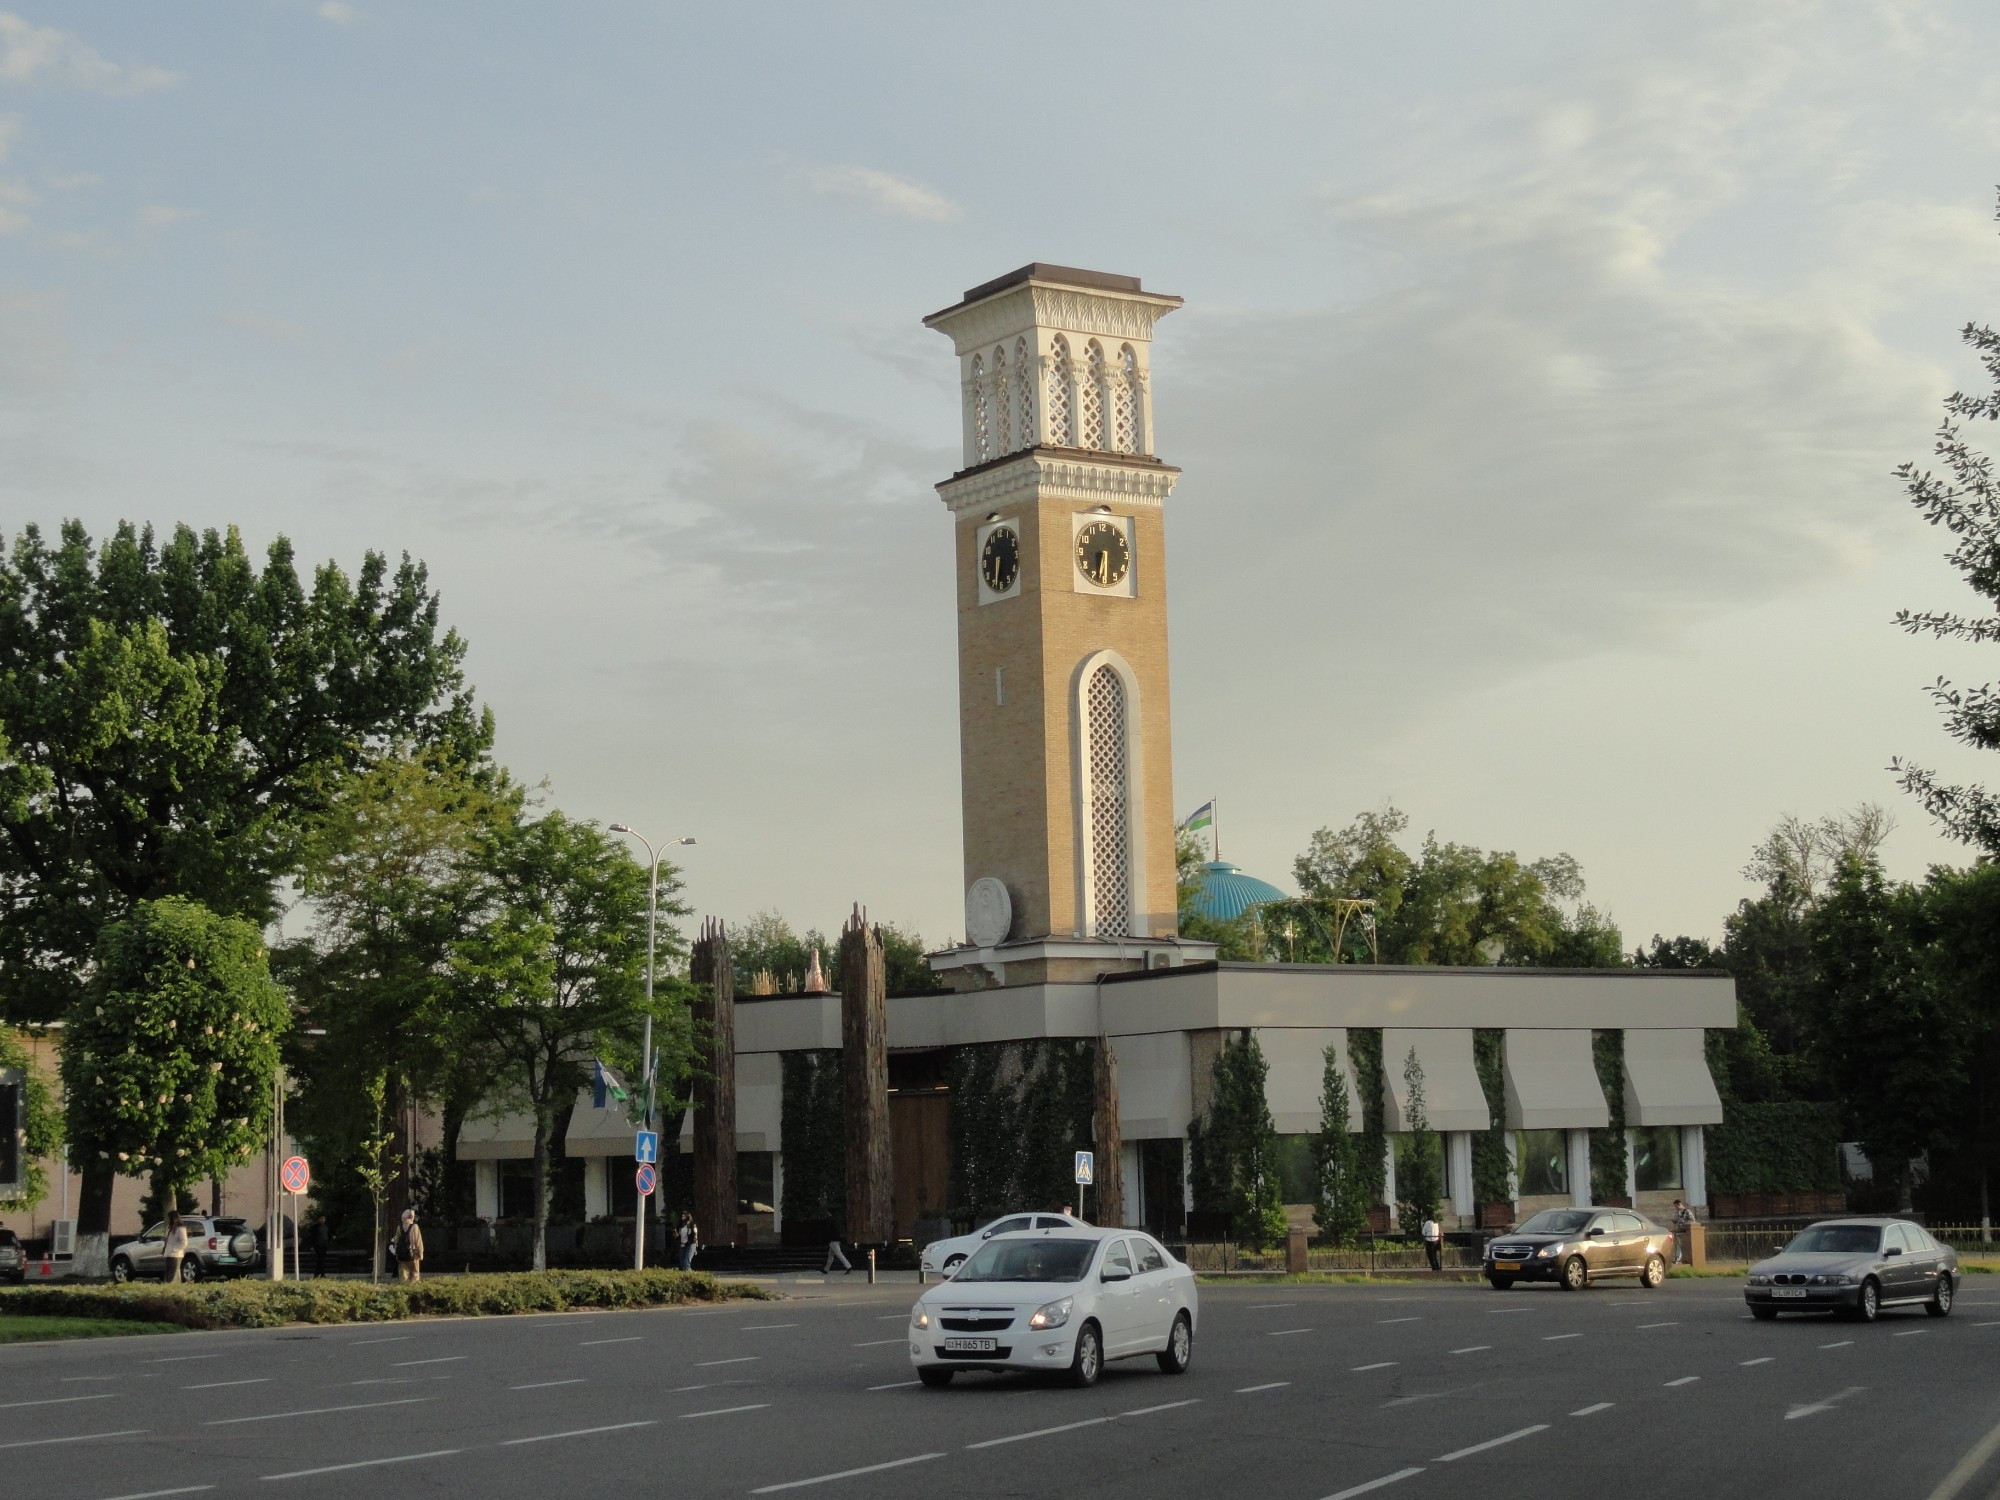 Ташкентские куранты — внизу кафешка, наверху часы